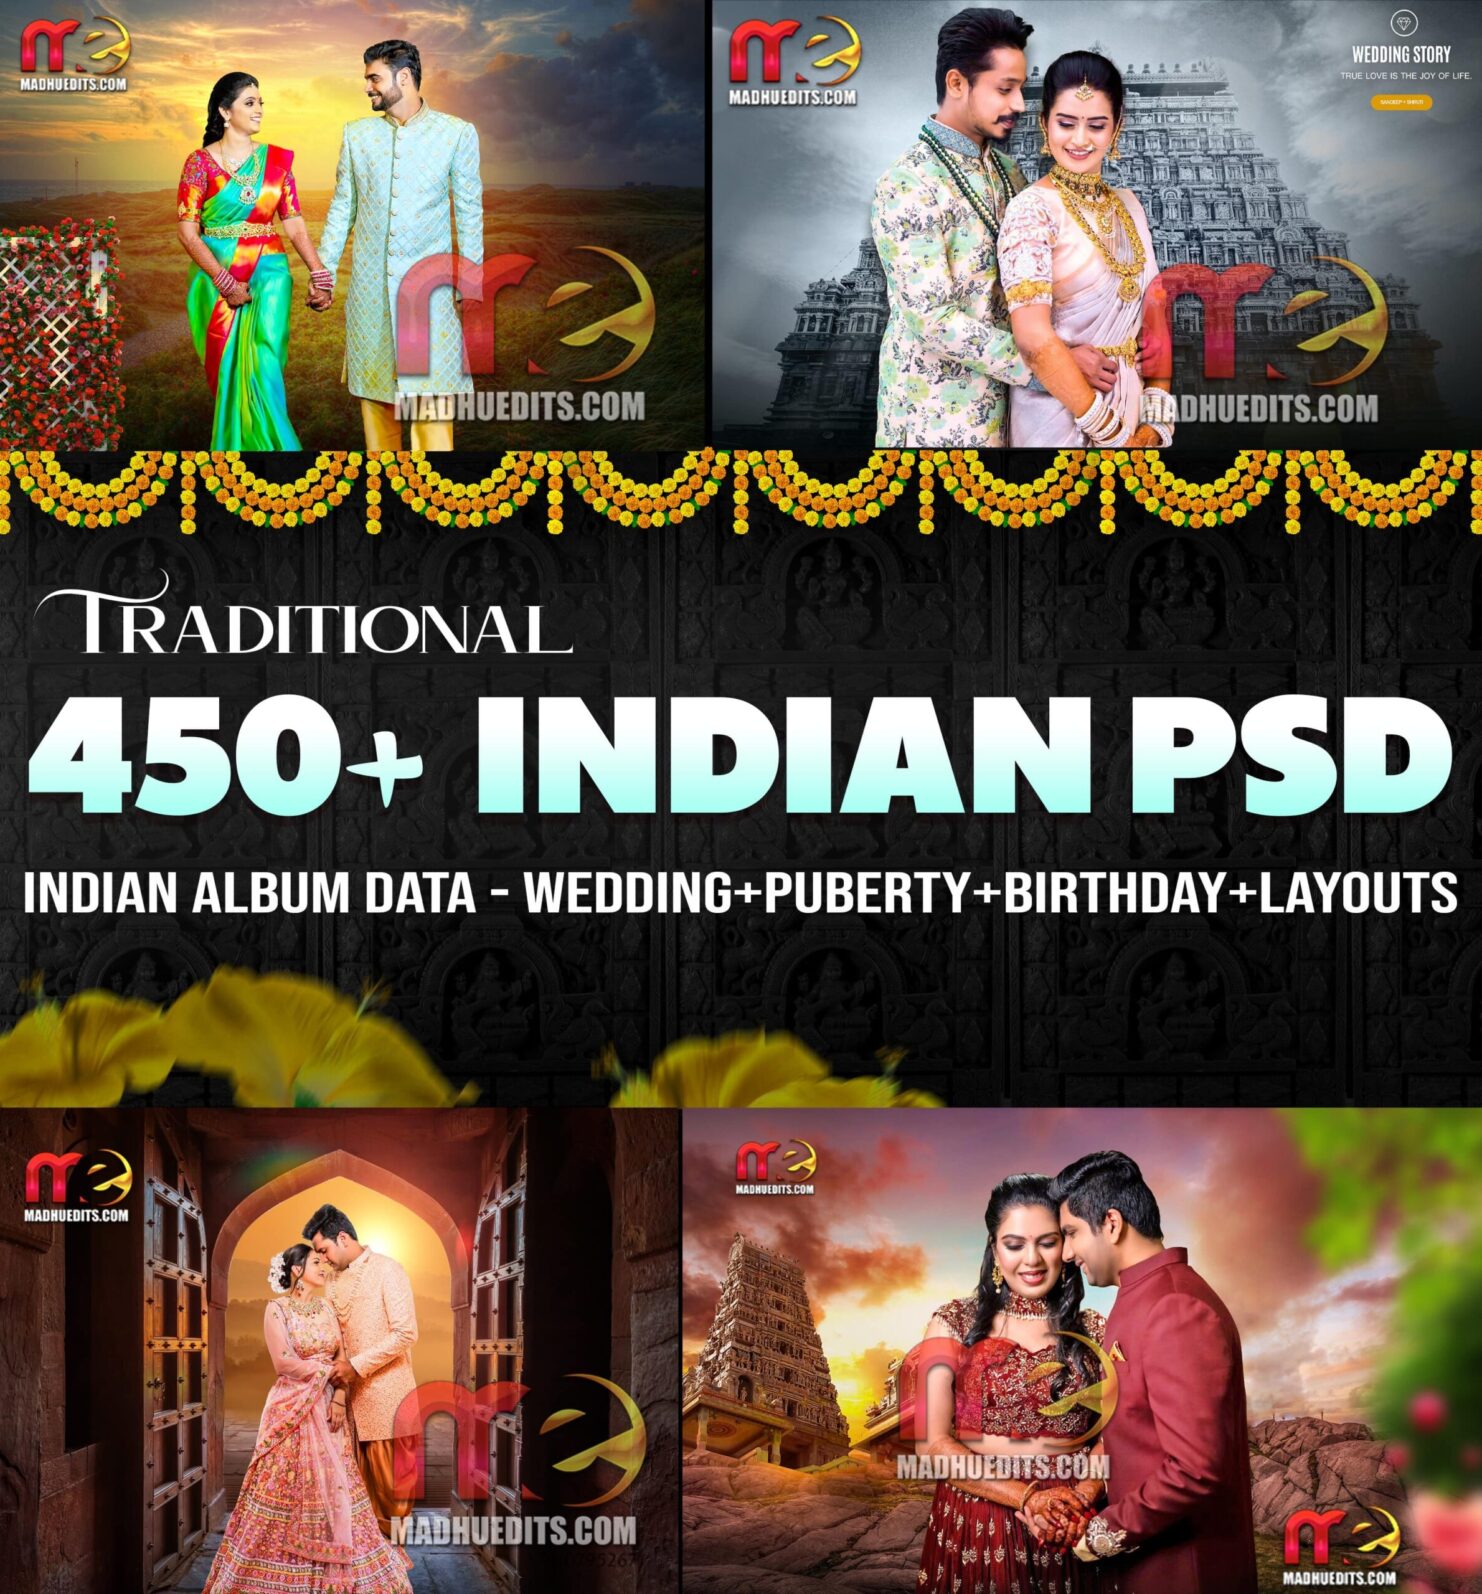 450+ NEW INDIAN WEDDING ALBUM PSD BIG OFFER PACK